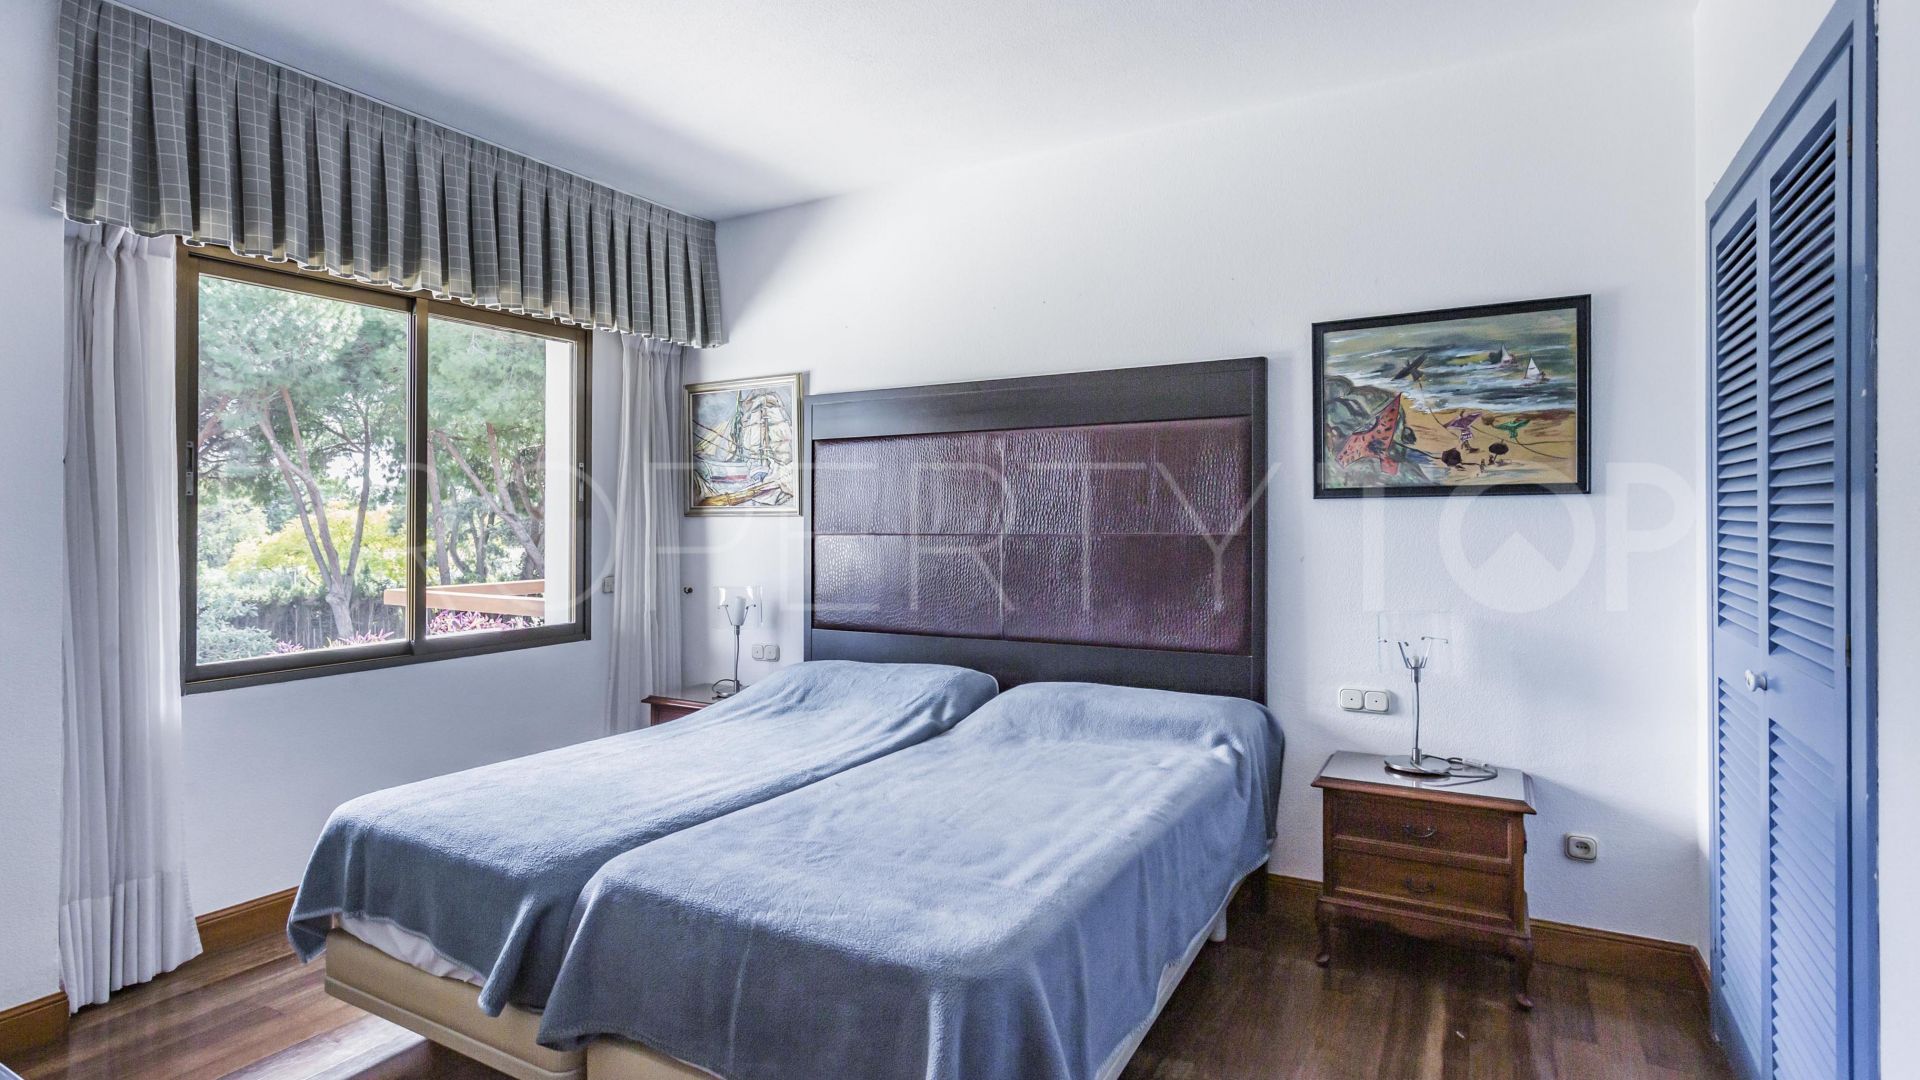 For sale villa with 10 bedrooms in Guadalmina Baja